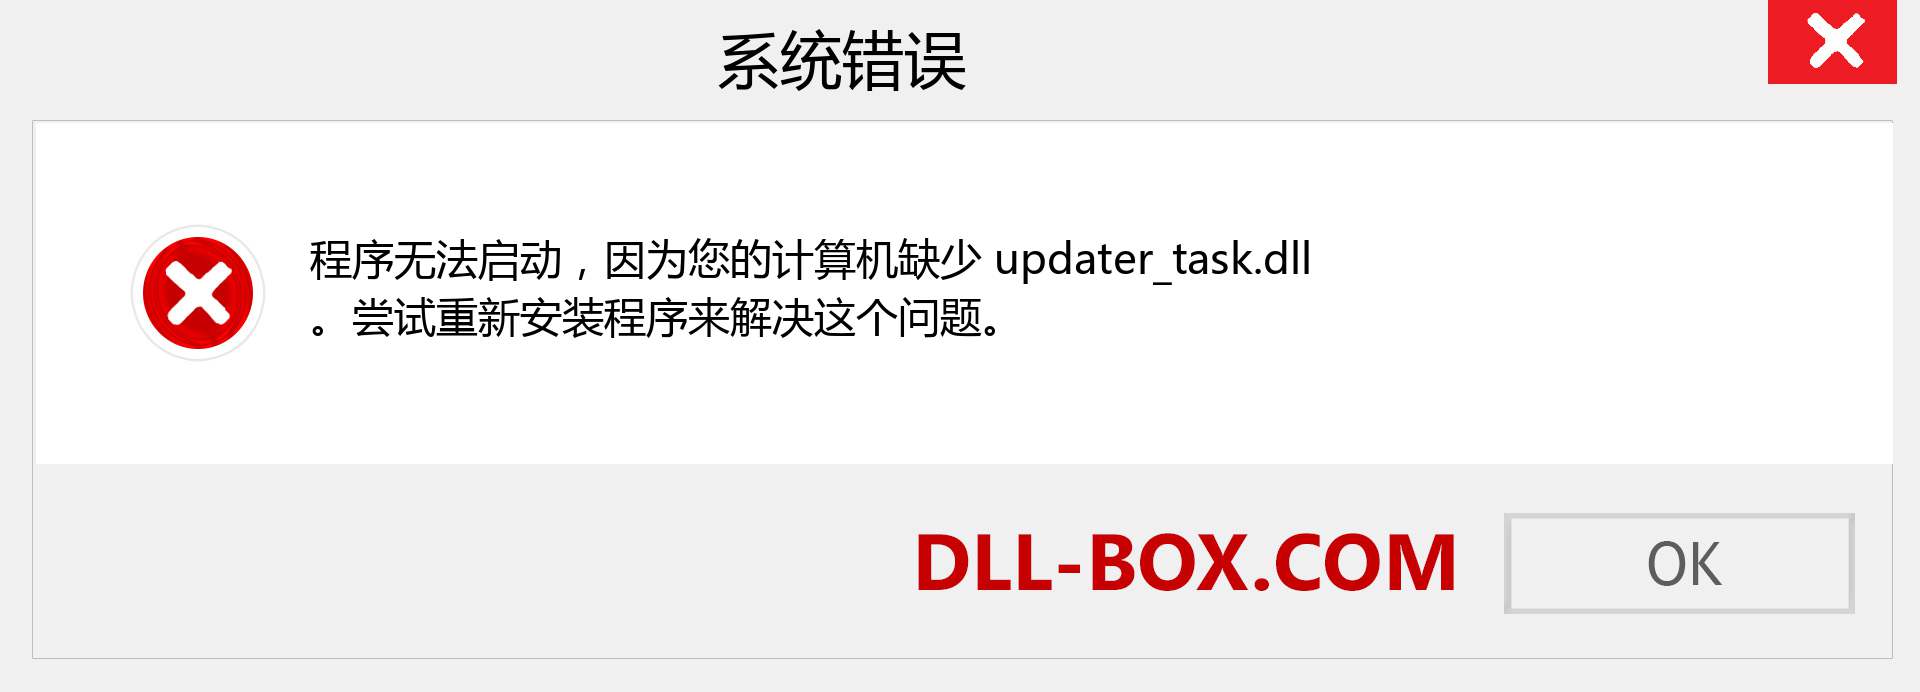 updater_task.dll 文件丢失？。 适用于 Windows 7、8、10 的下载 - 修复 Windows、照片、图像上的 updater_task dll 丢失错误